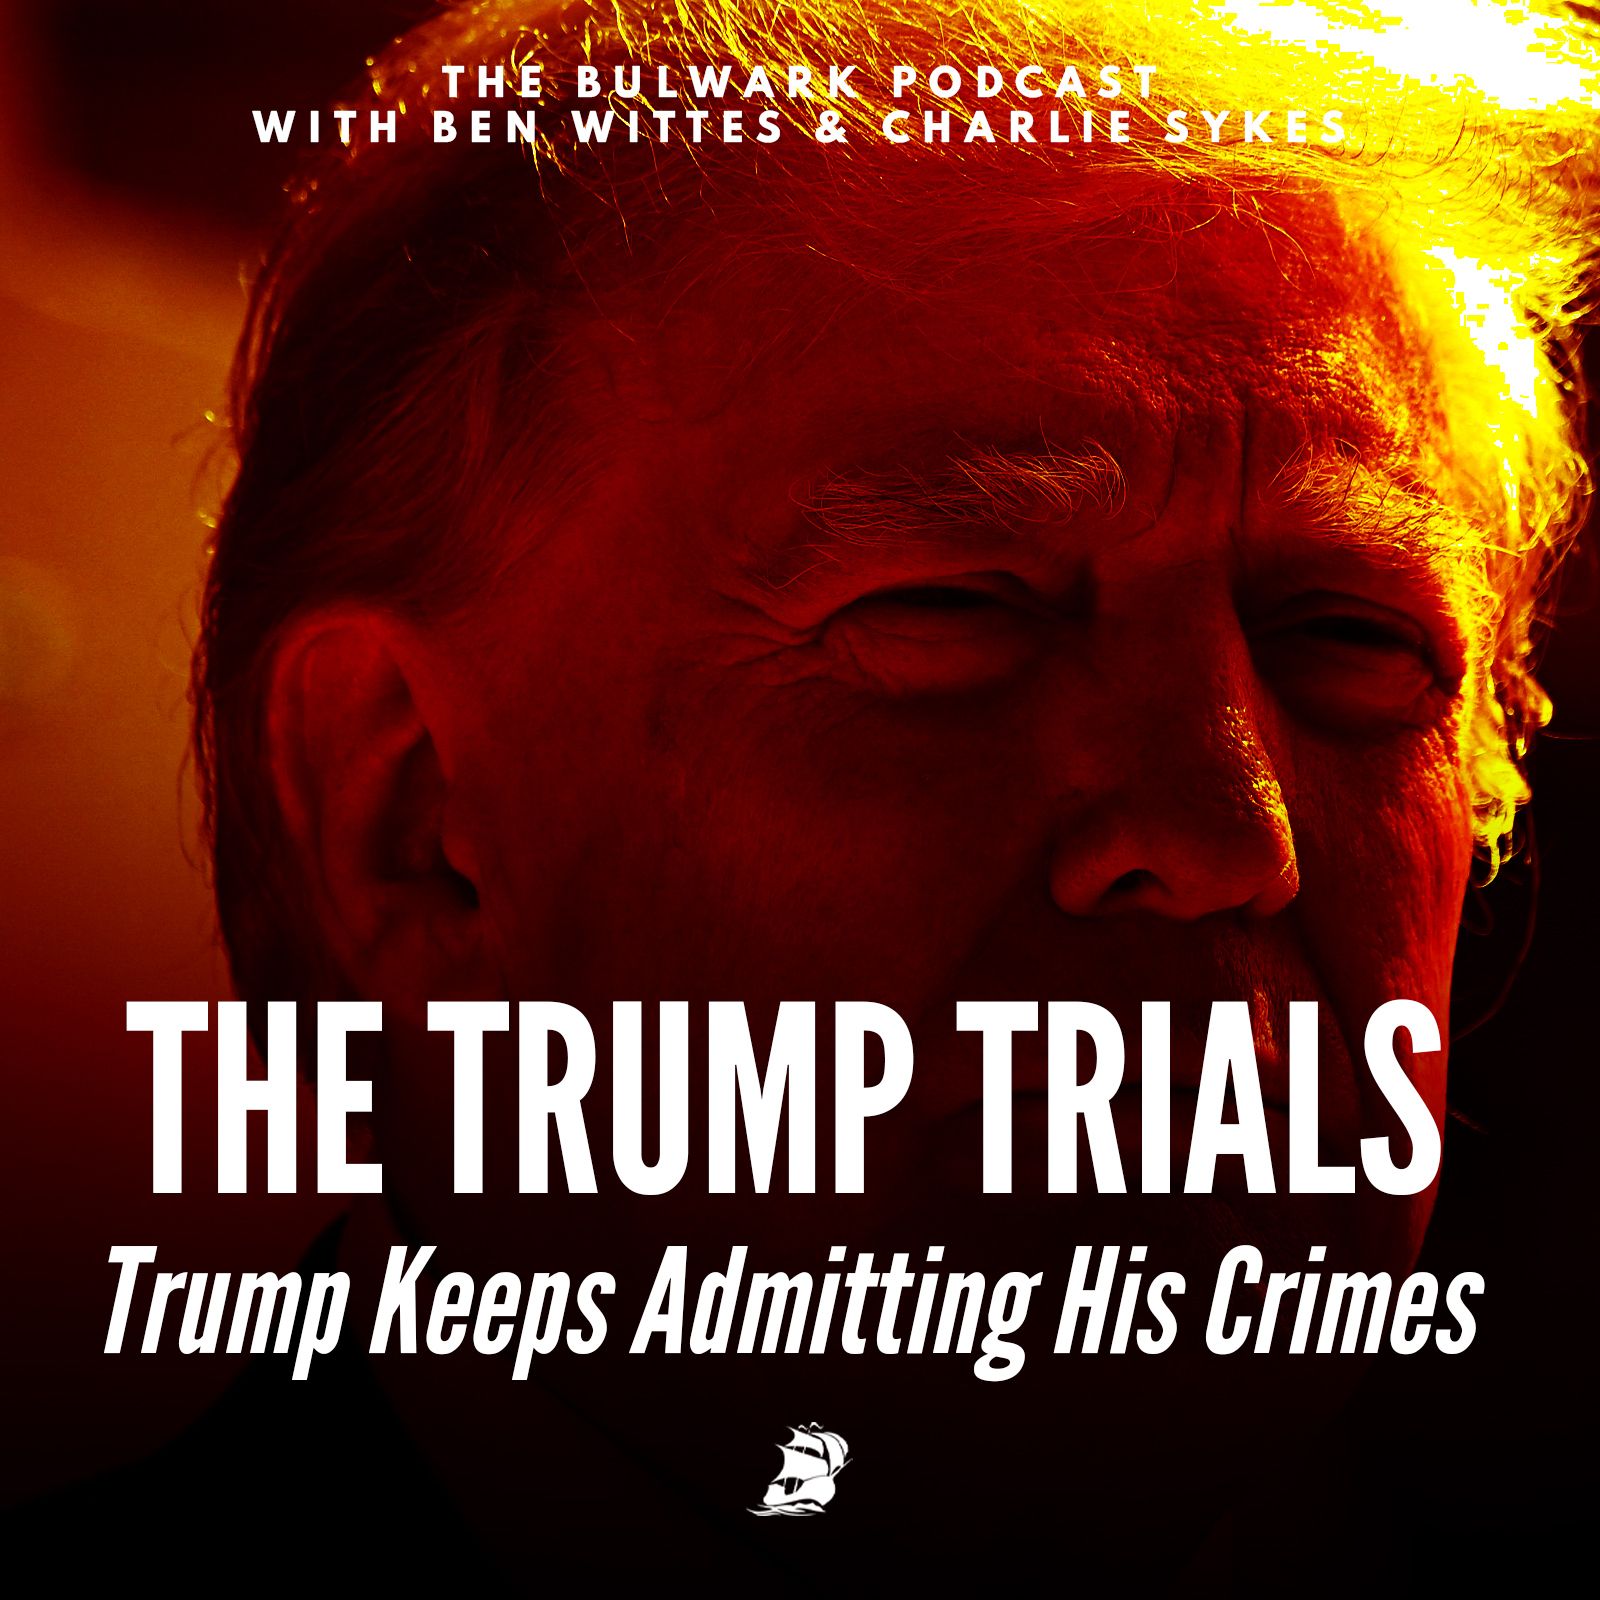 Trump Keeps Admitting His Crimes